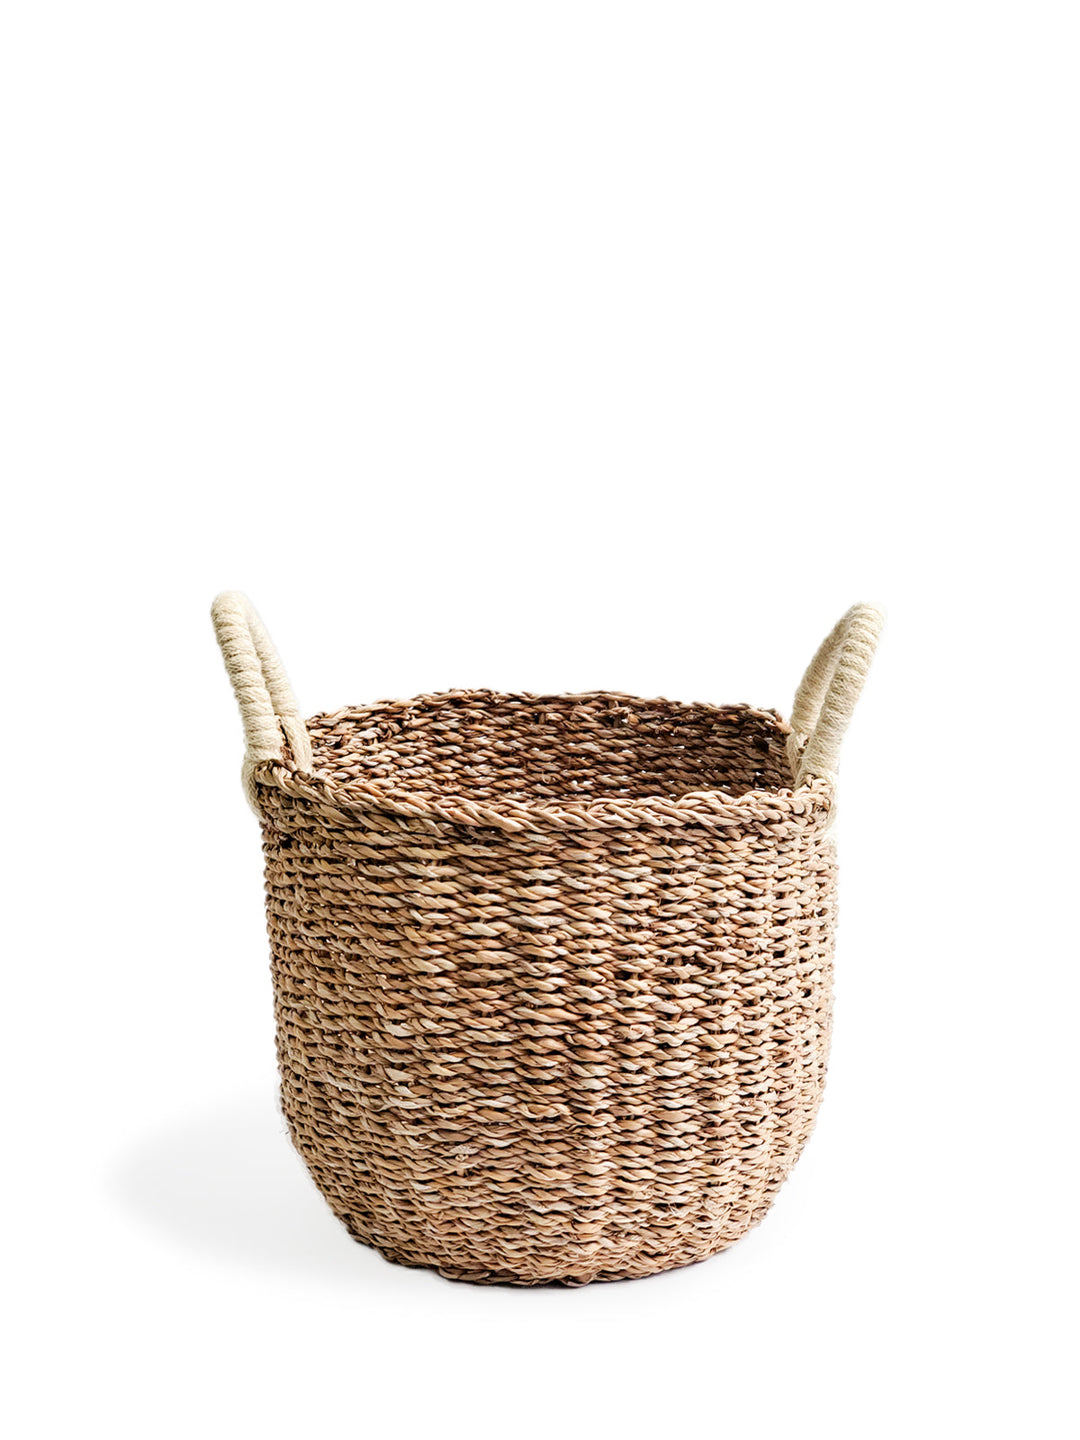 Savar Basket with White Handle-7